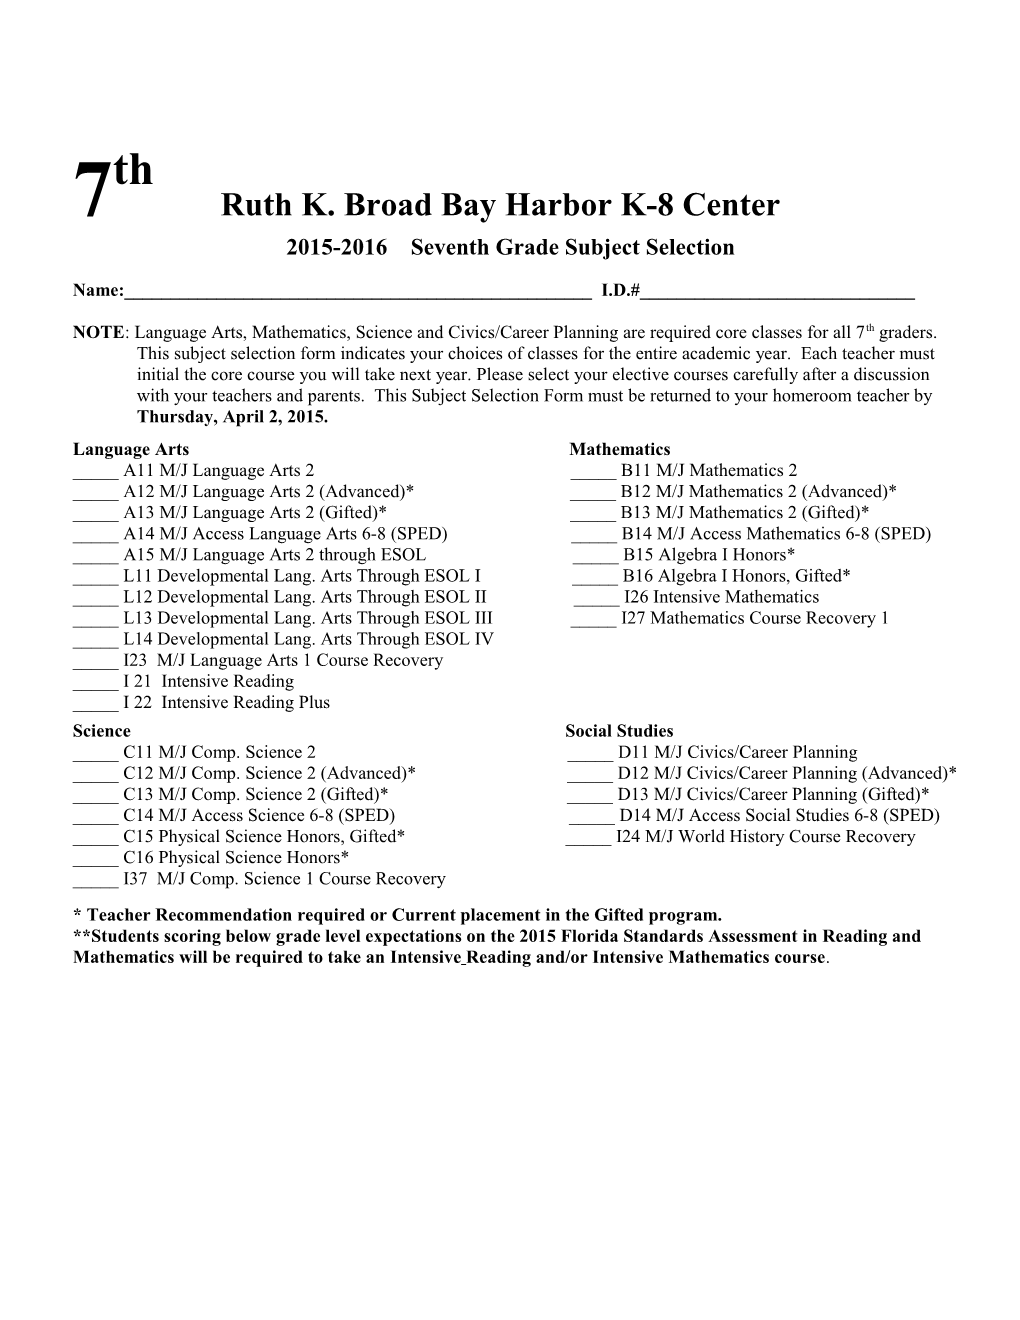 7Th Ruth K. Broad Bay Harbor K-8 Center